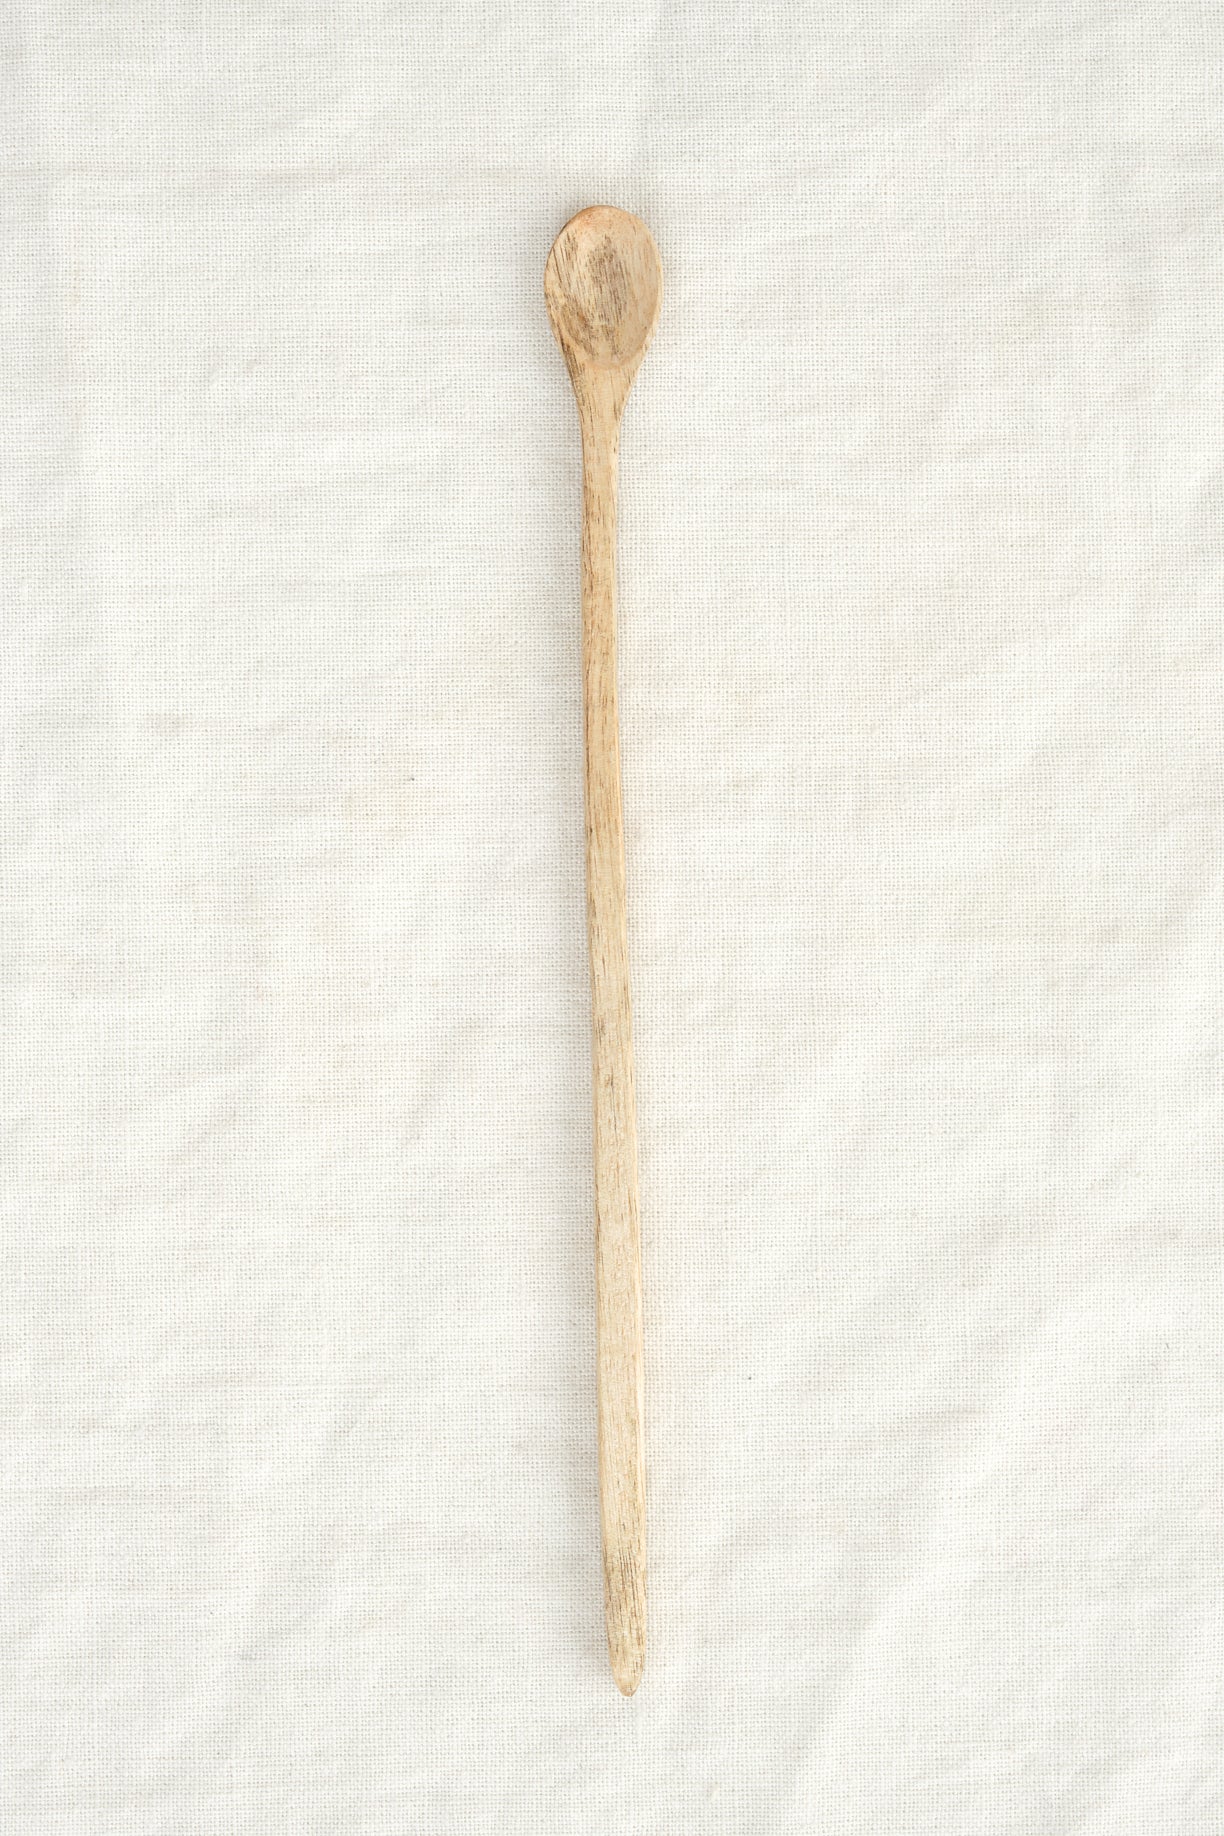 Fog Linen Work mango wood spoon